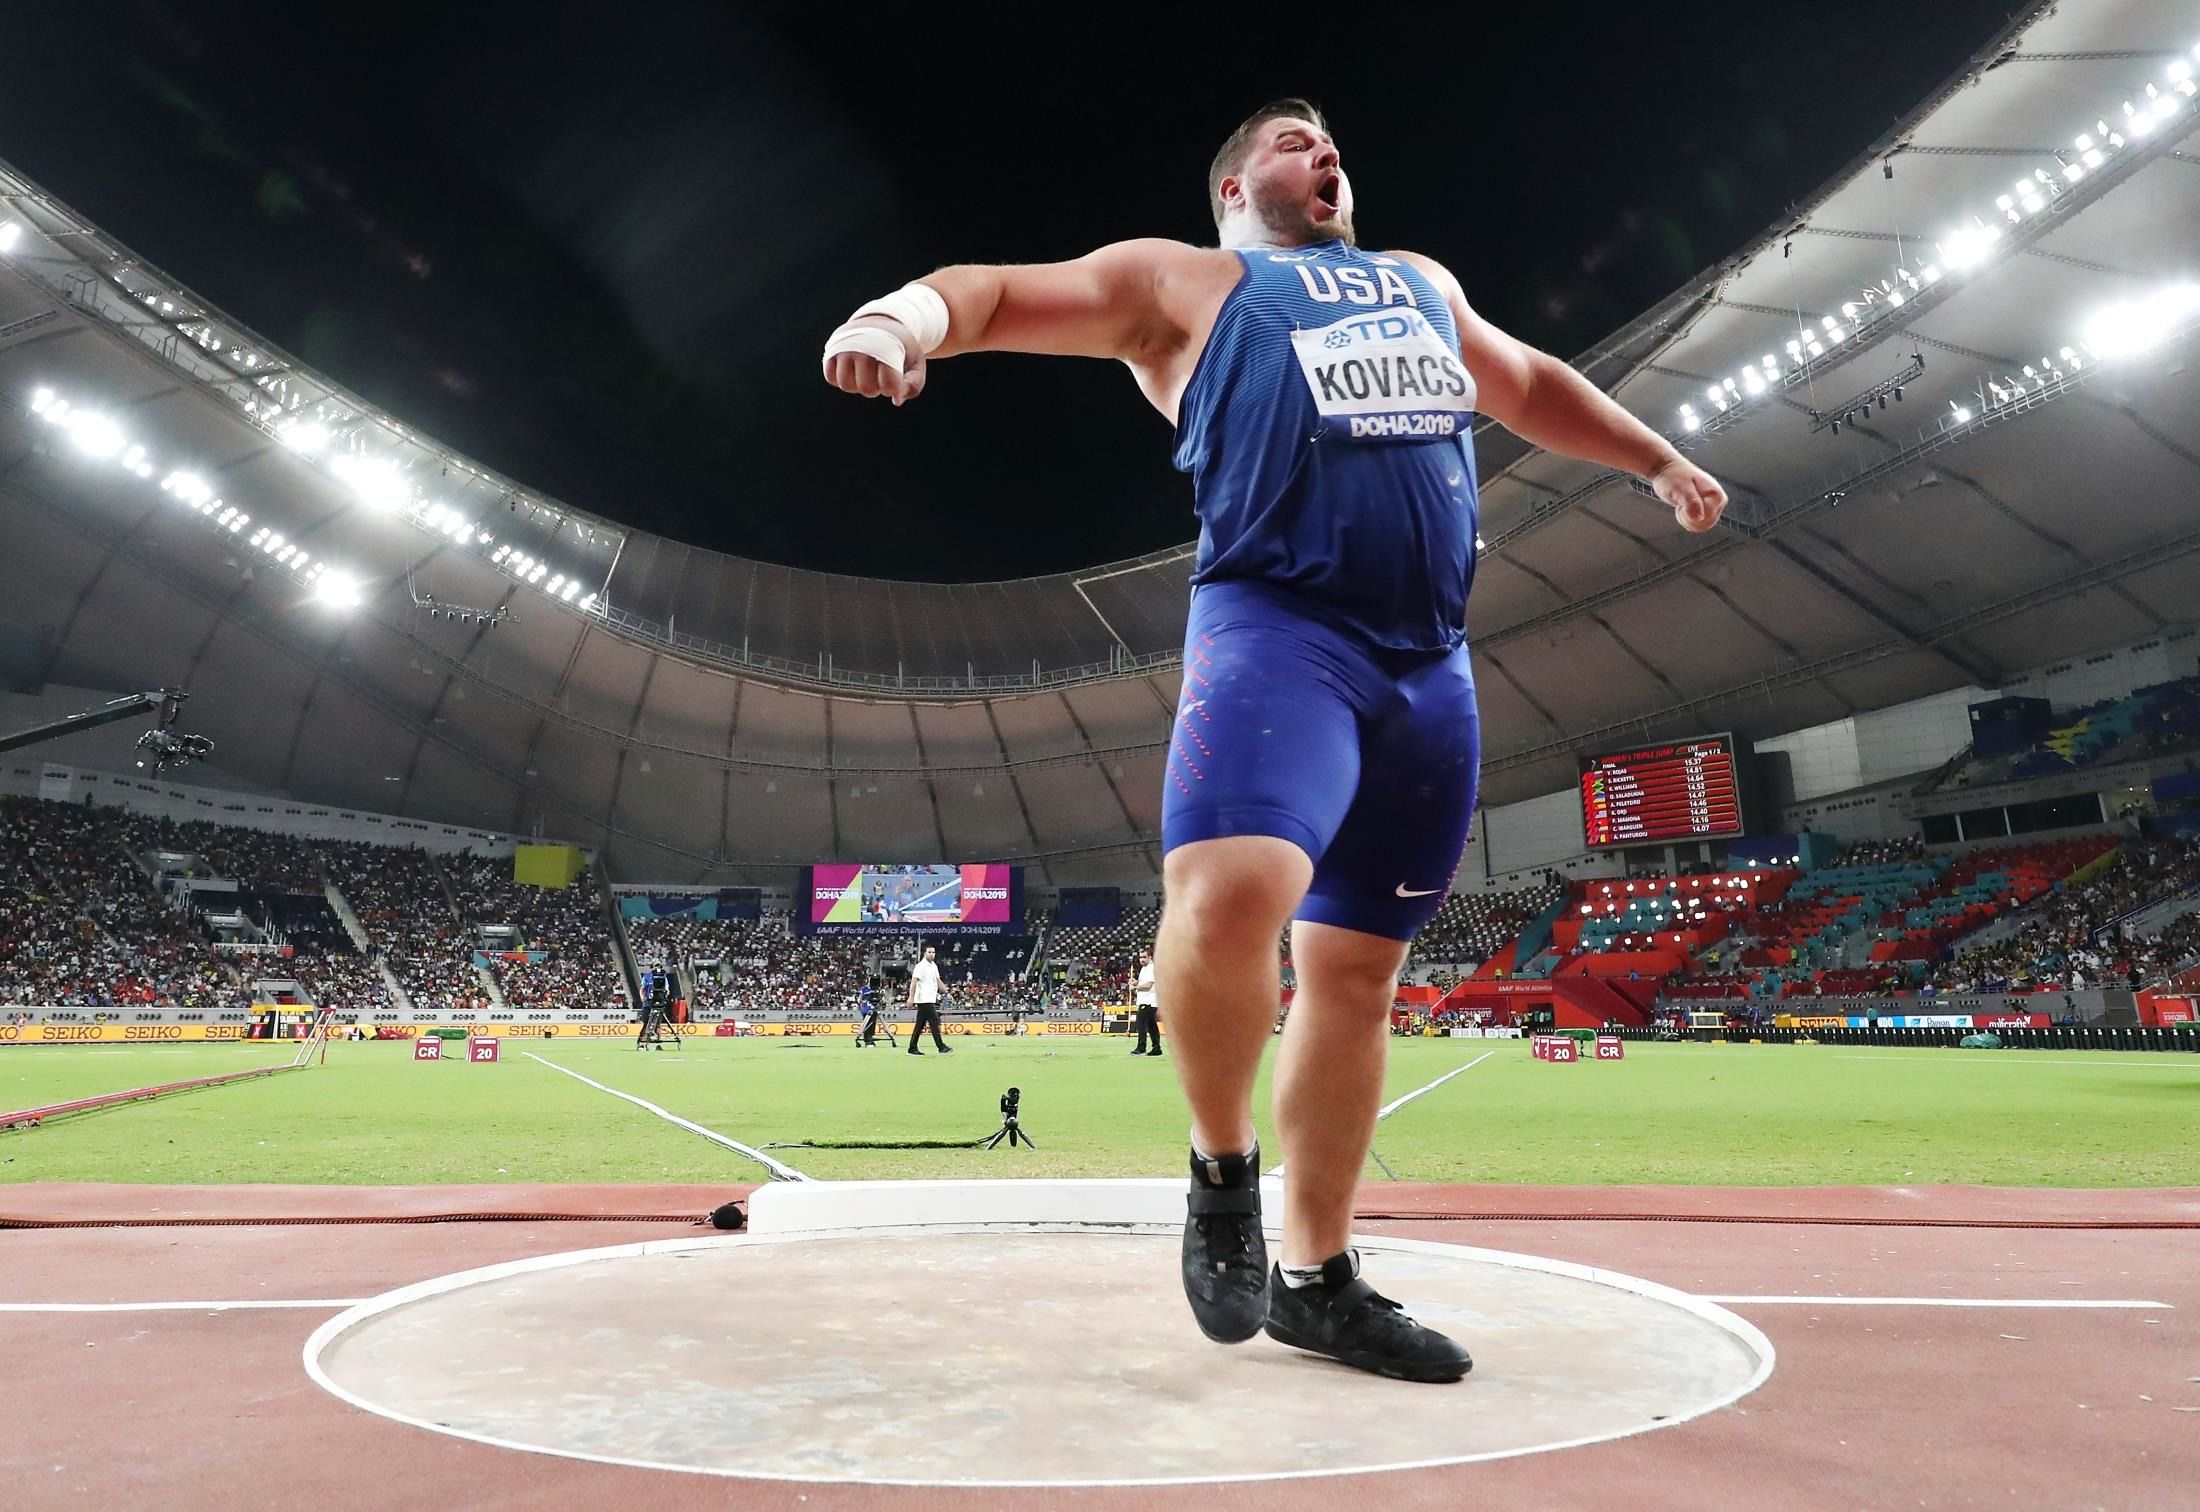 Joe Kovacs after unleashing his winning throw at the IAAF World Athletics Championships Doha 2019